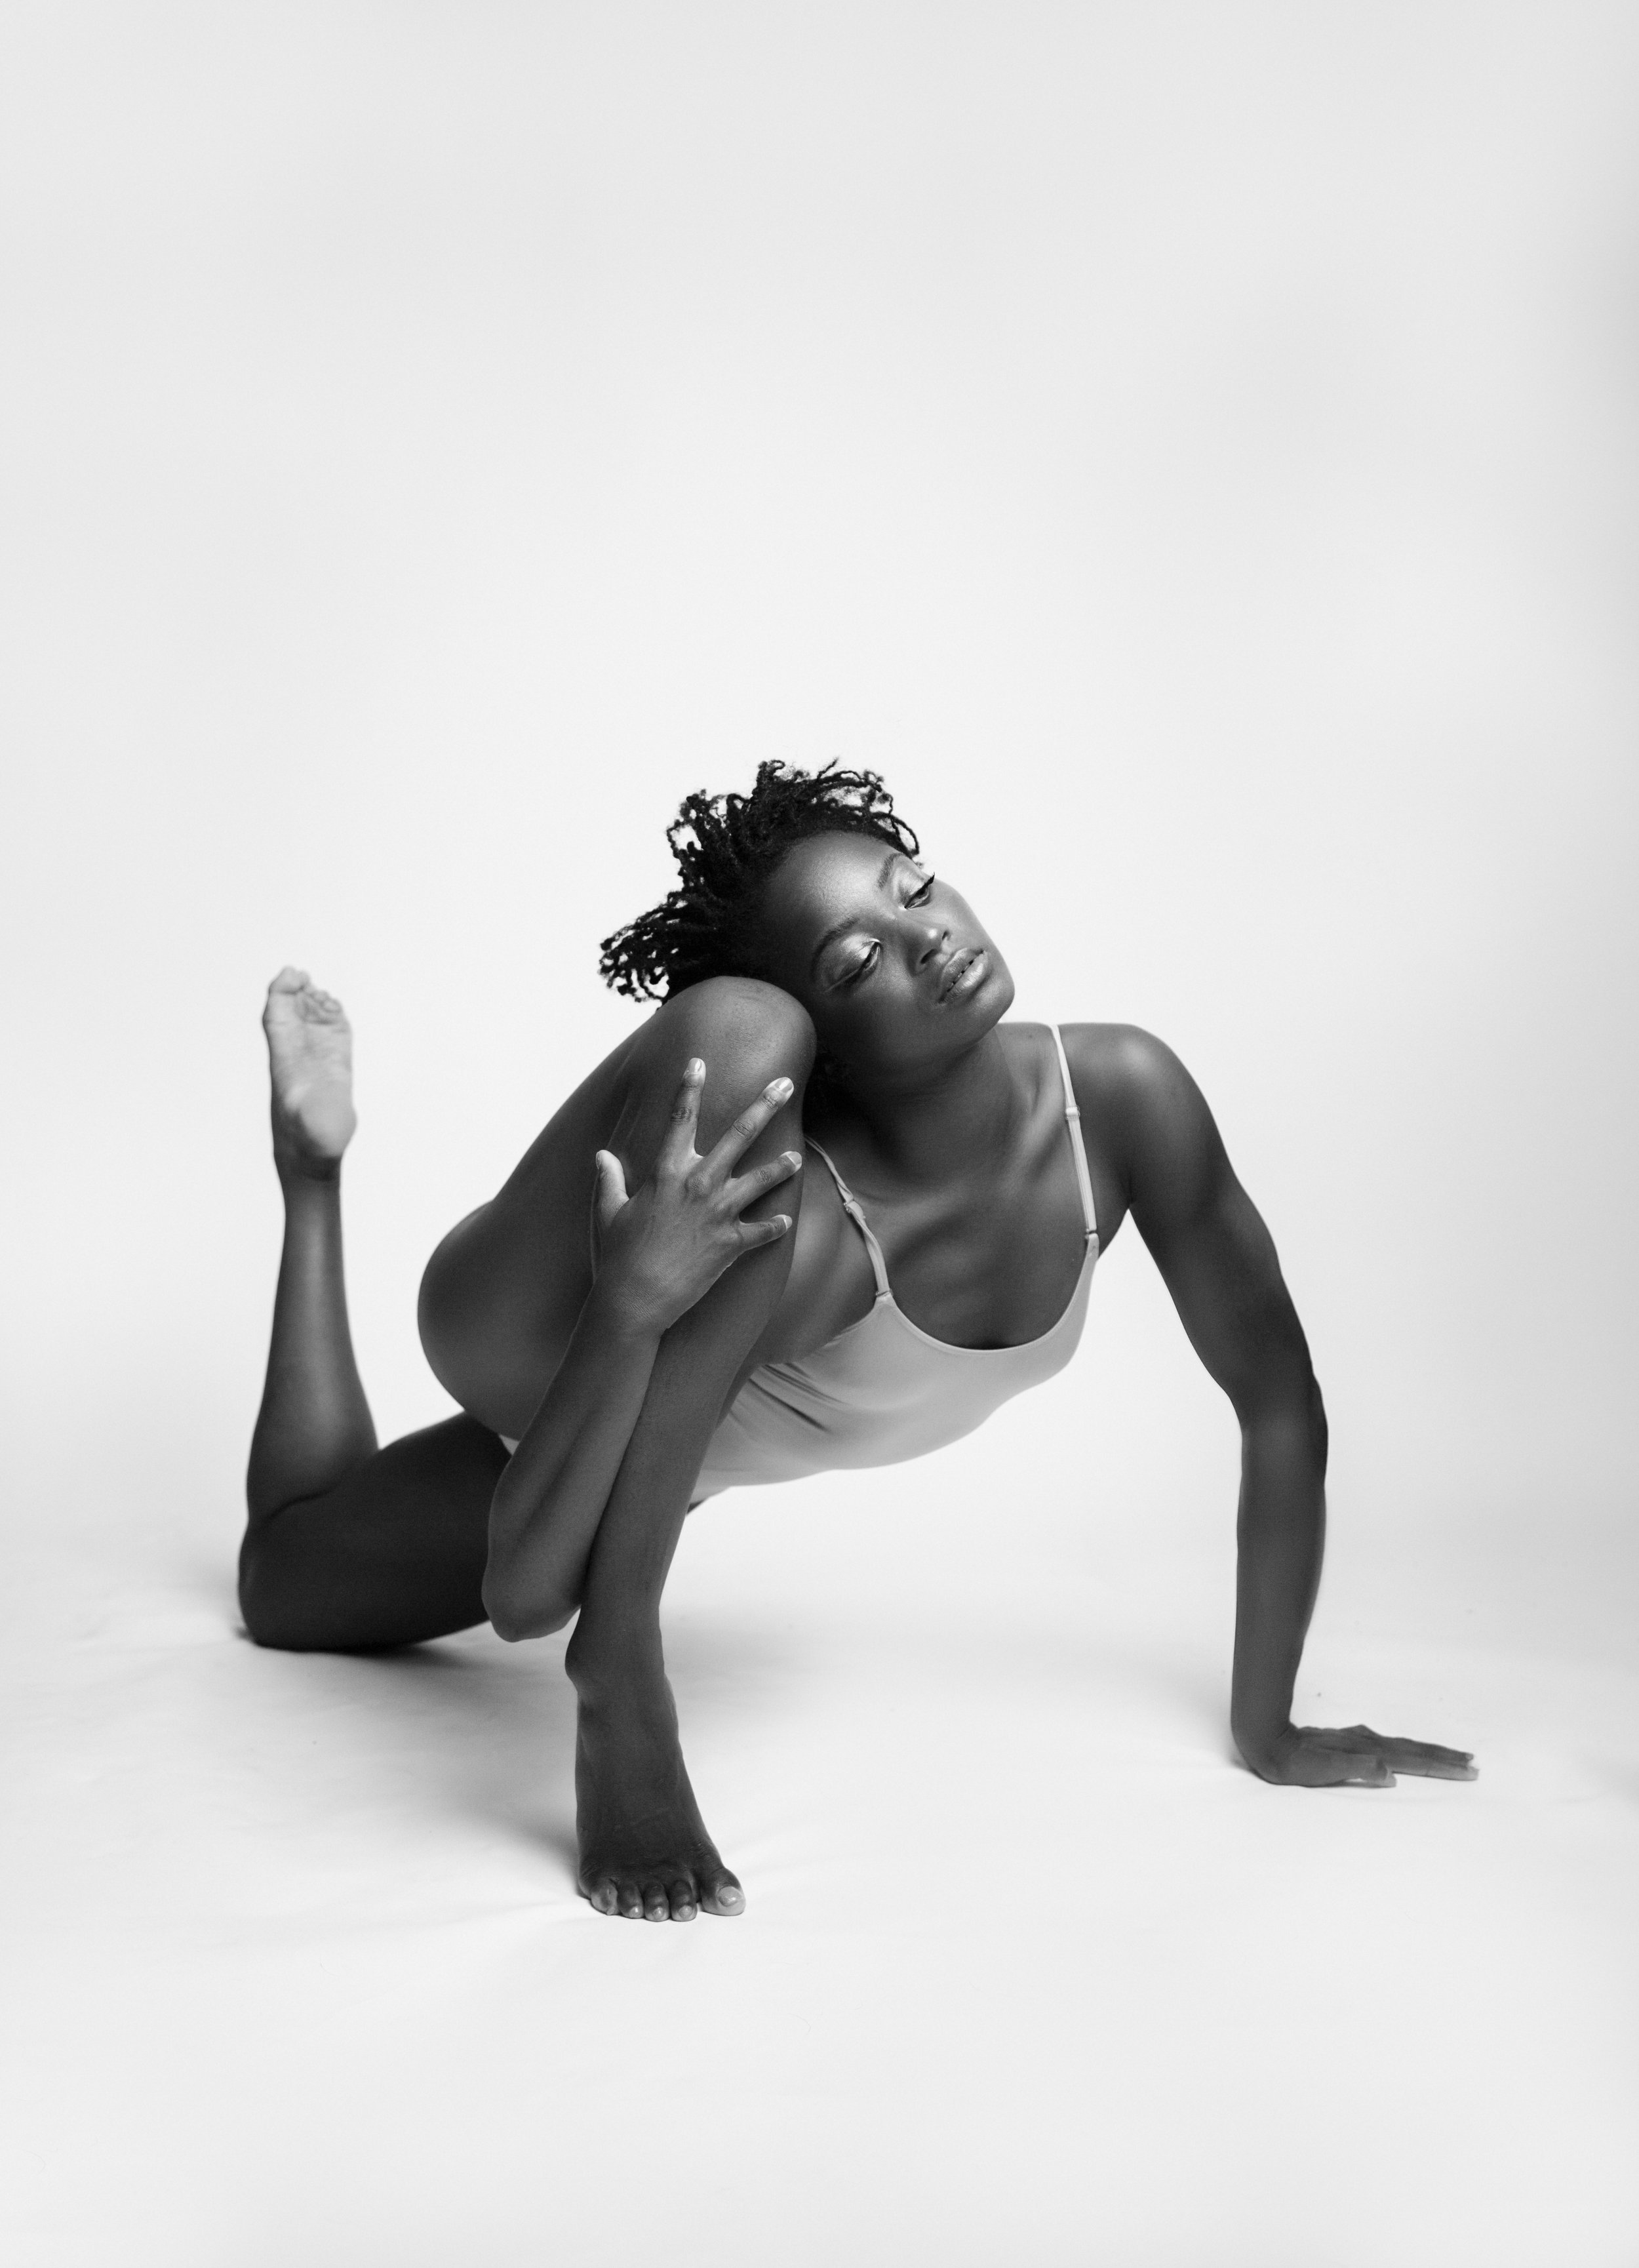  national rhythmic gymnastics team member in Kirkland photography Photoshoot.  Dance portrait of black woman dancer. 